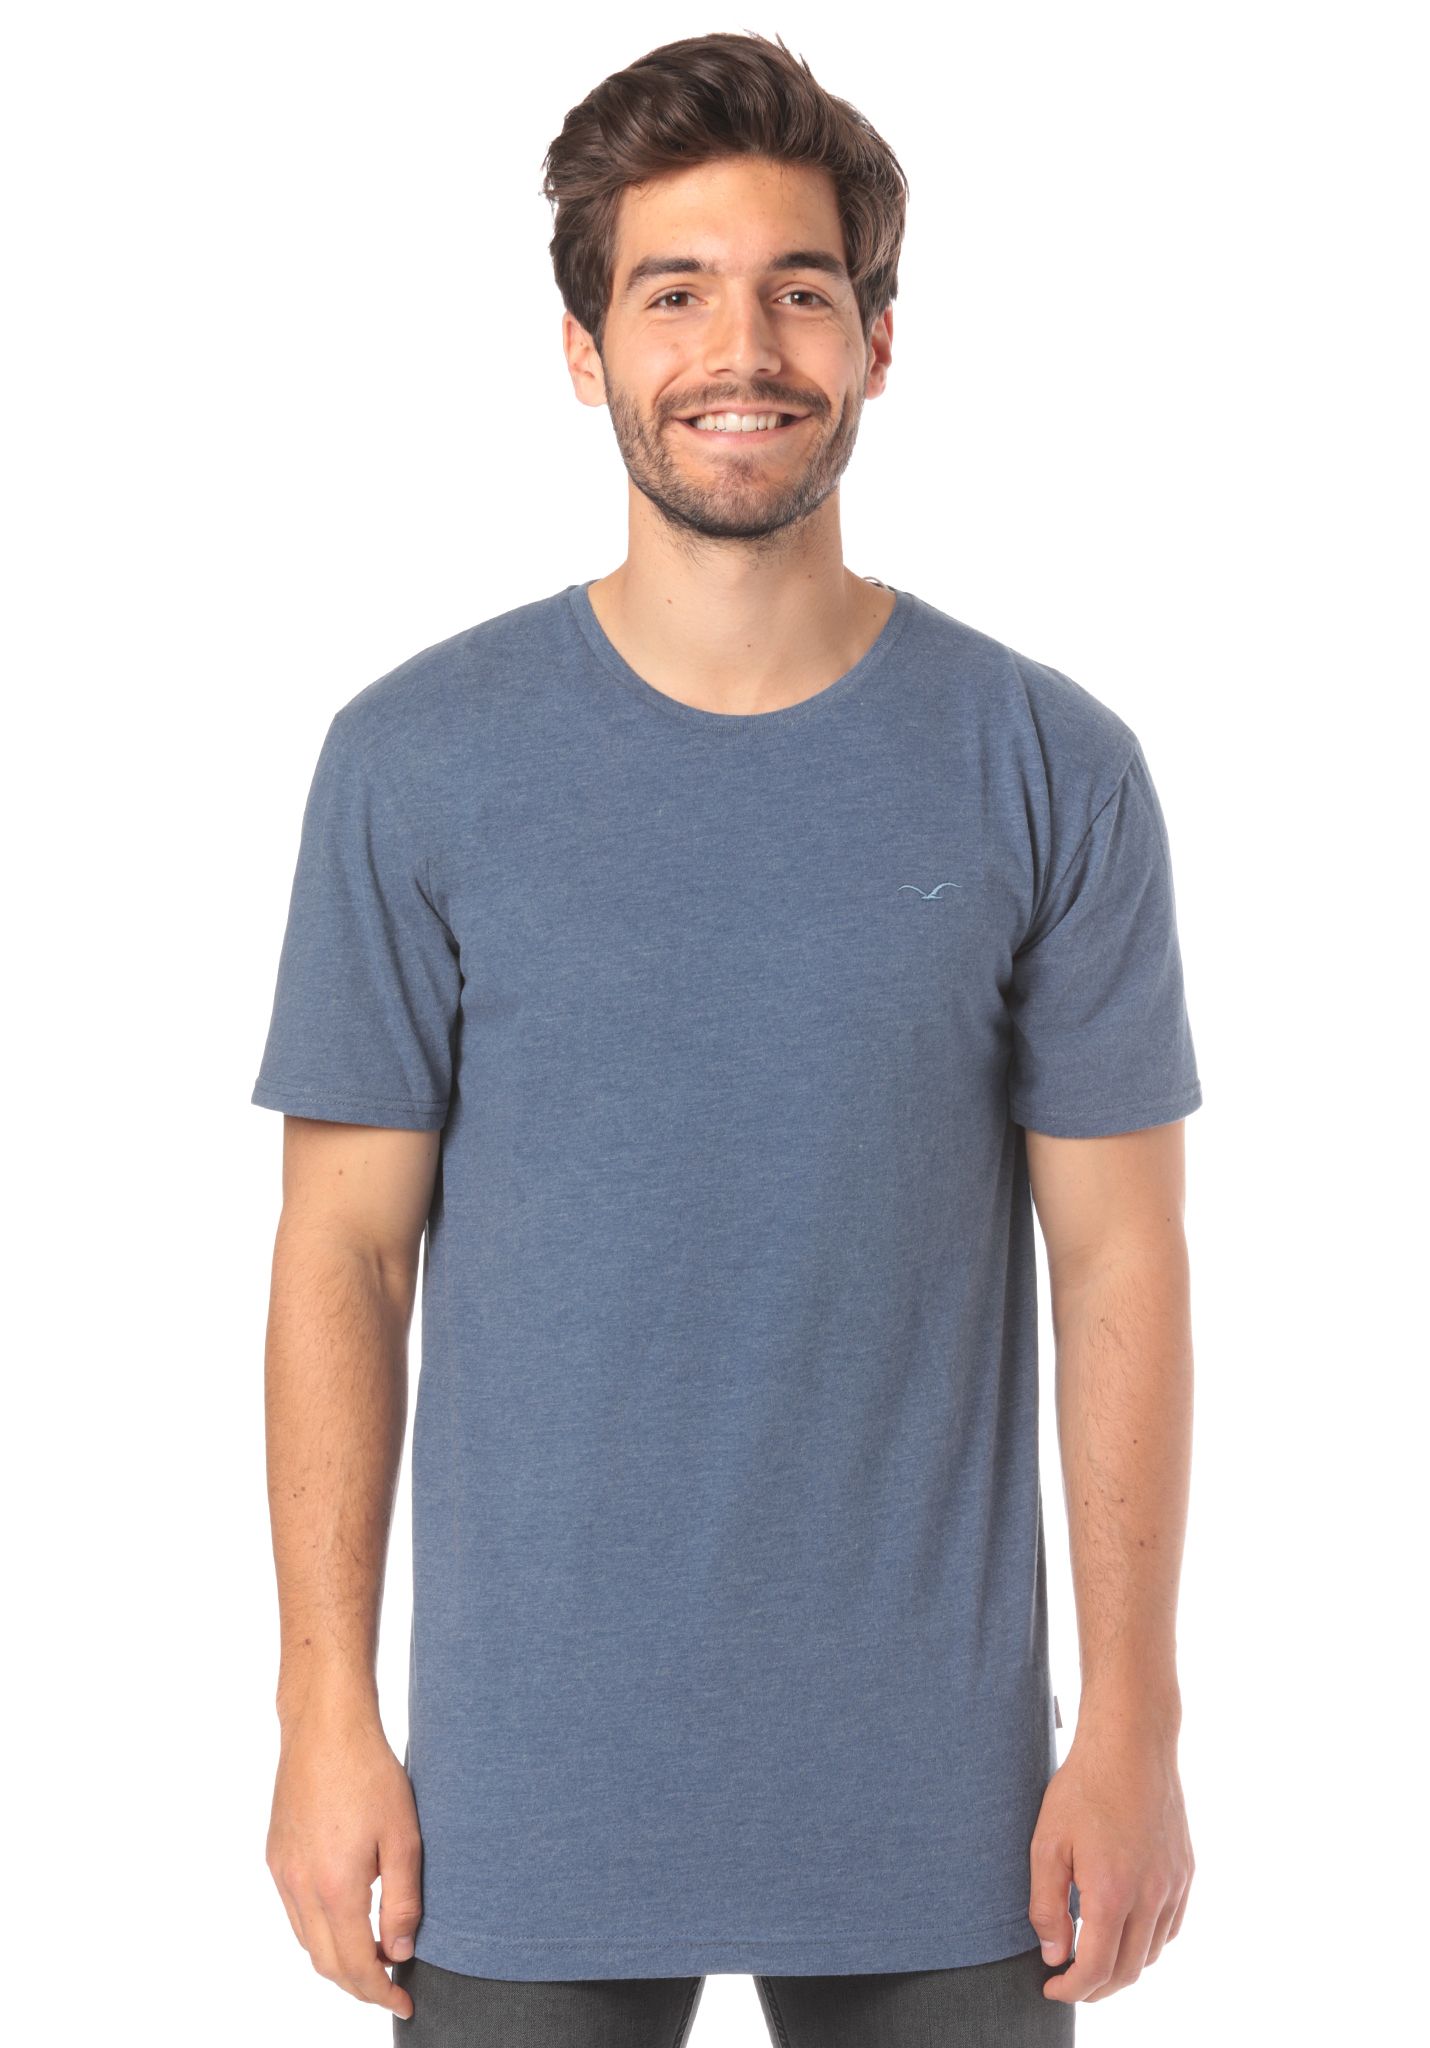 Cleptomanicx Ligull Long 2 T-Shirt heather blue XXL